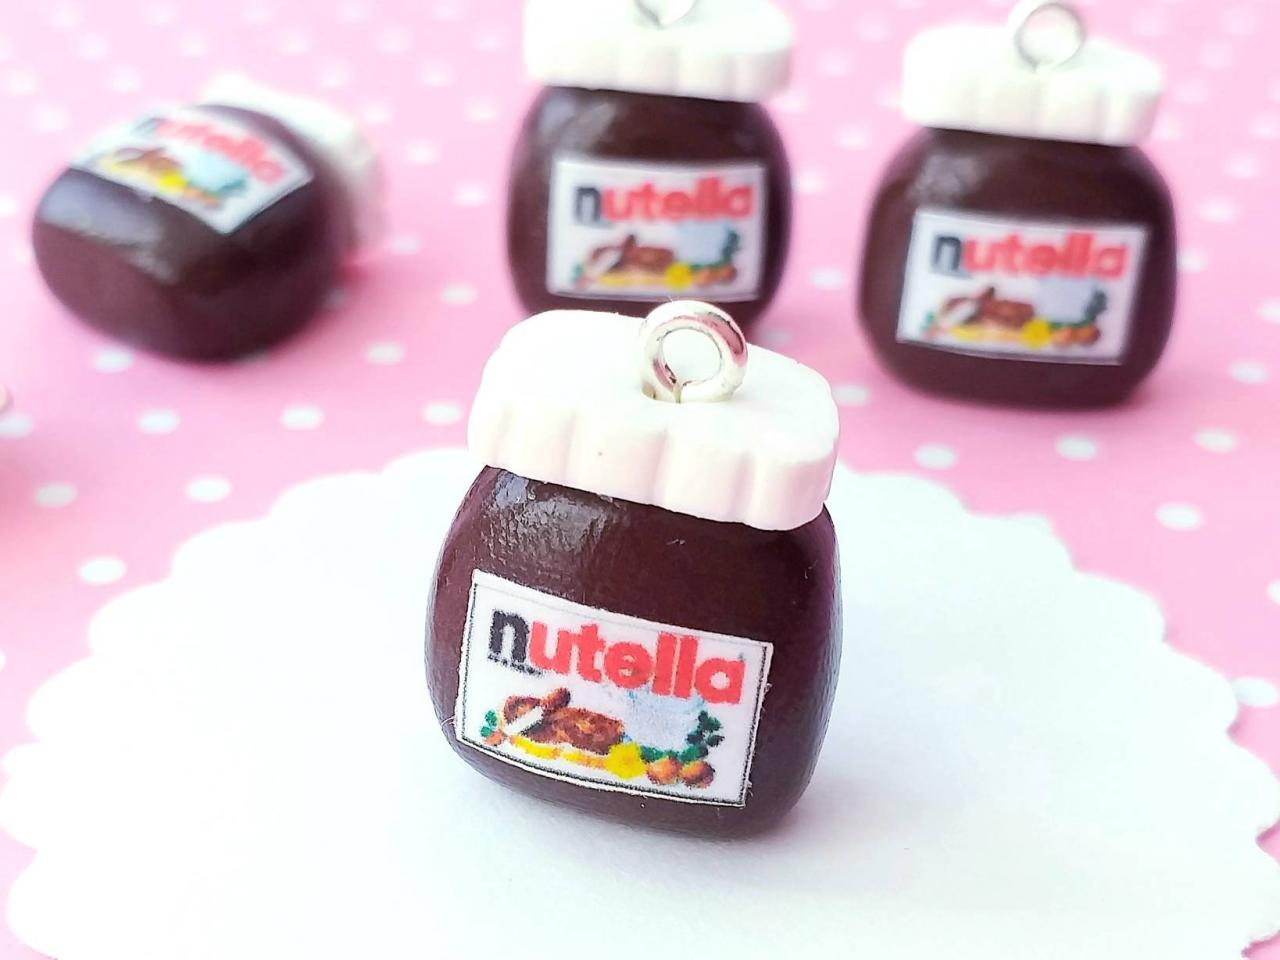 Miniature Nutella Jar Charm - Miniature Food - Kawaii Charms - Polymer Clay Charms - Food Jewelry - Gift - Necklace Pendant - Food Keychain